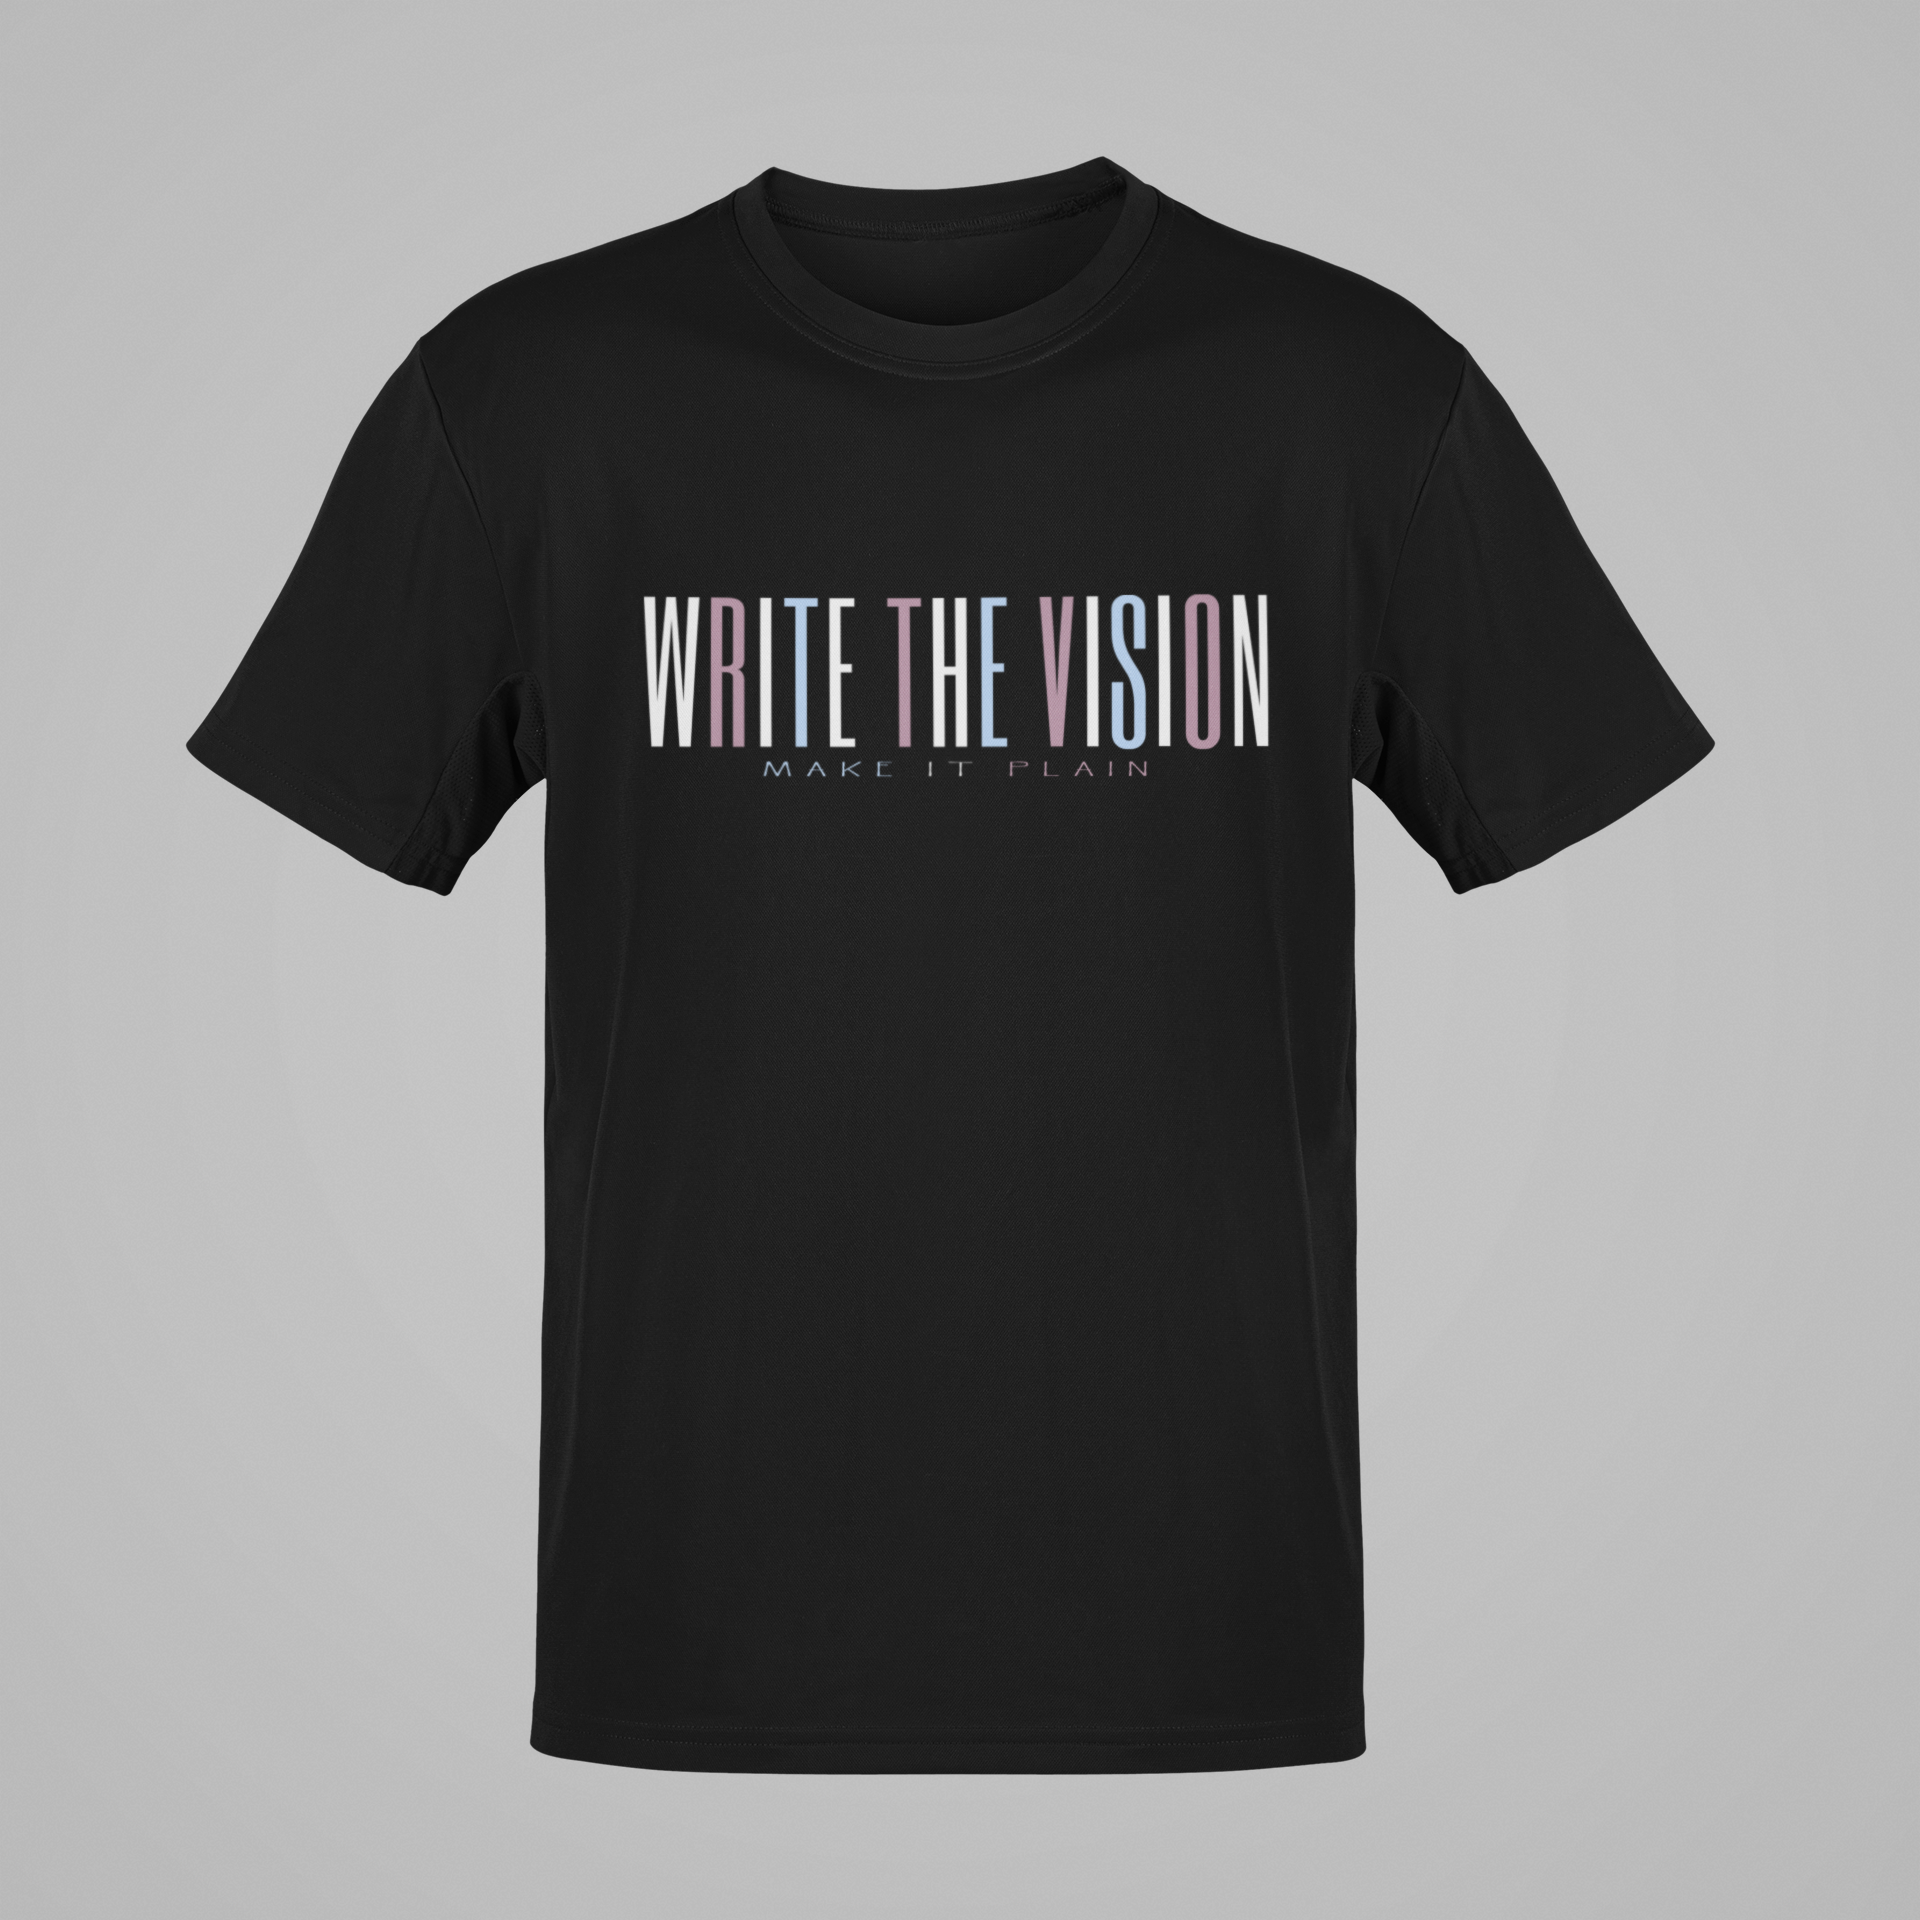 Write the vision Make it Plain Hoodie/t shirt typography